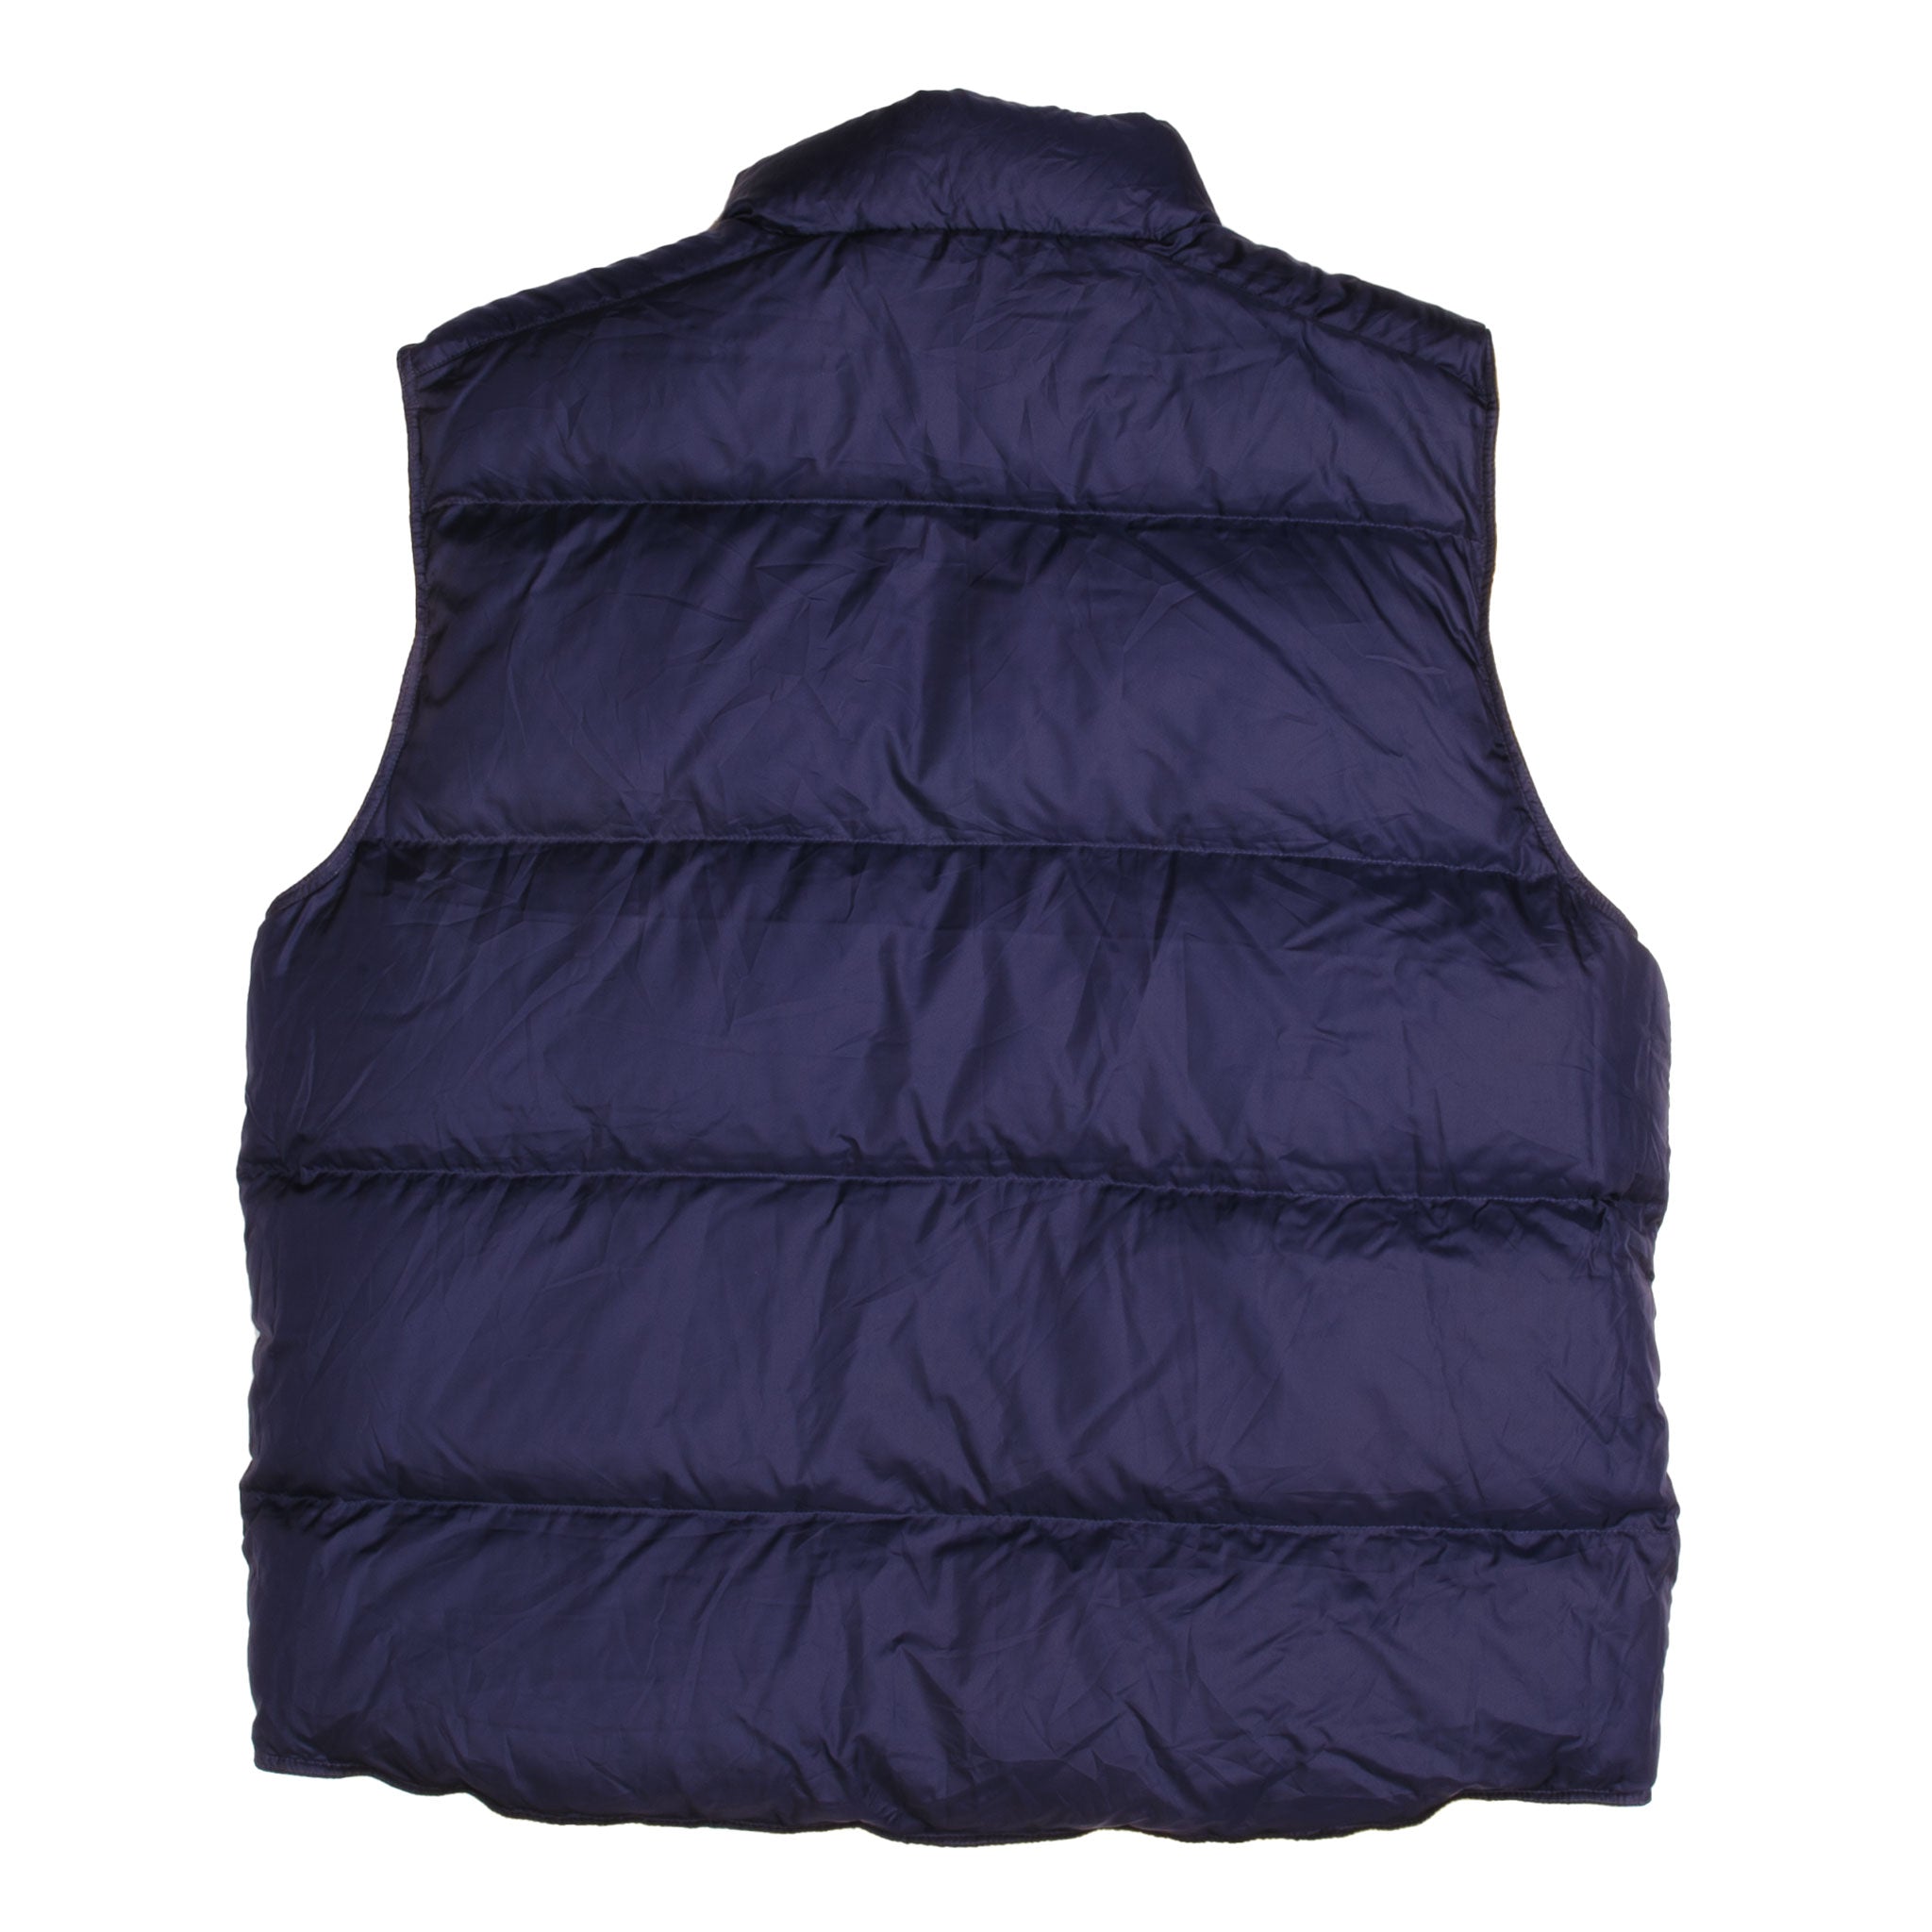 ARUNDEL deadstock blue sleeveless puffer jacket